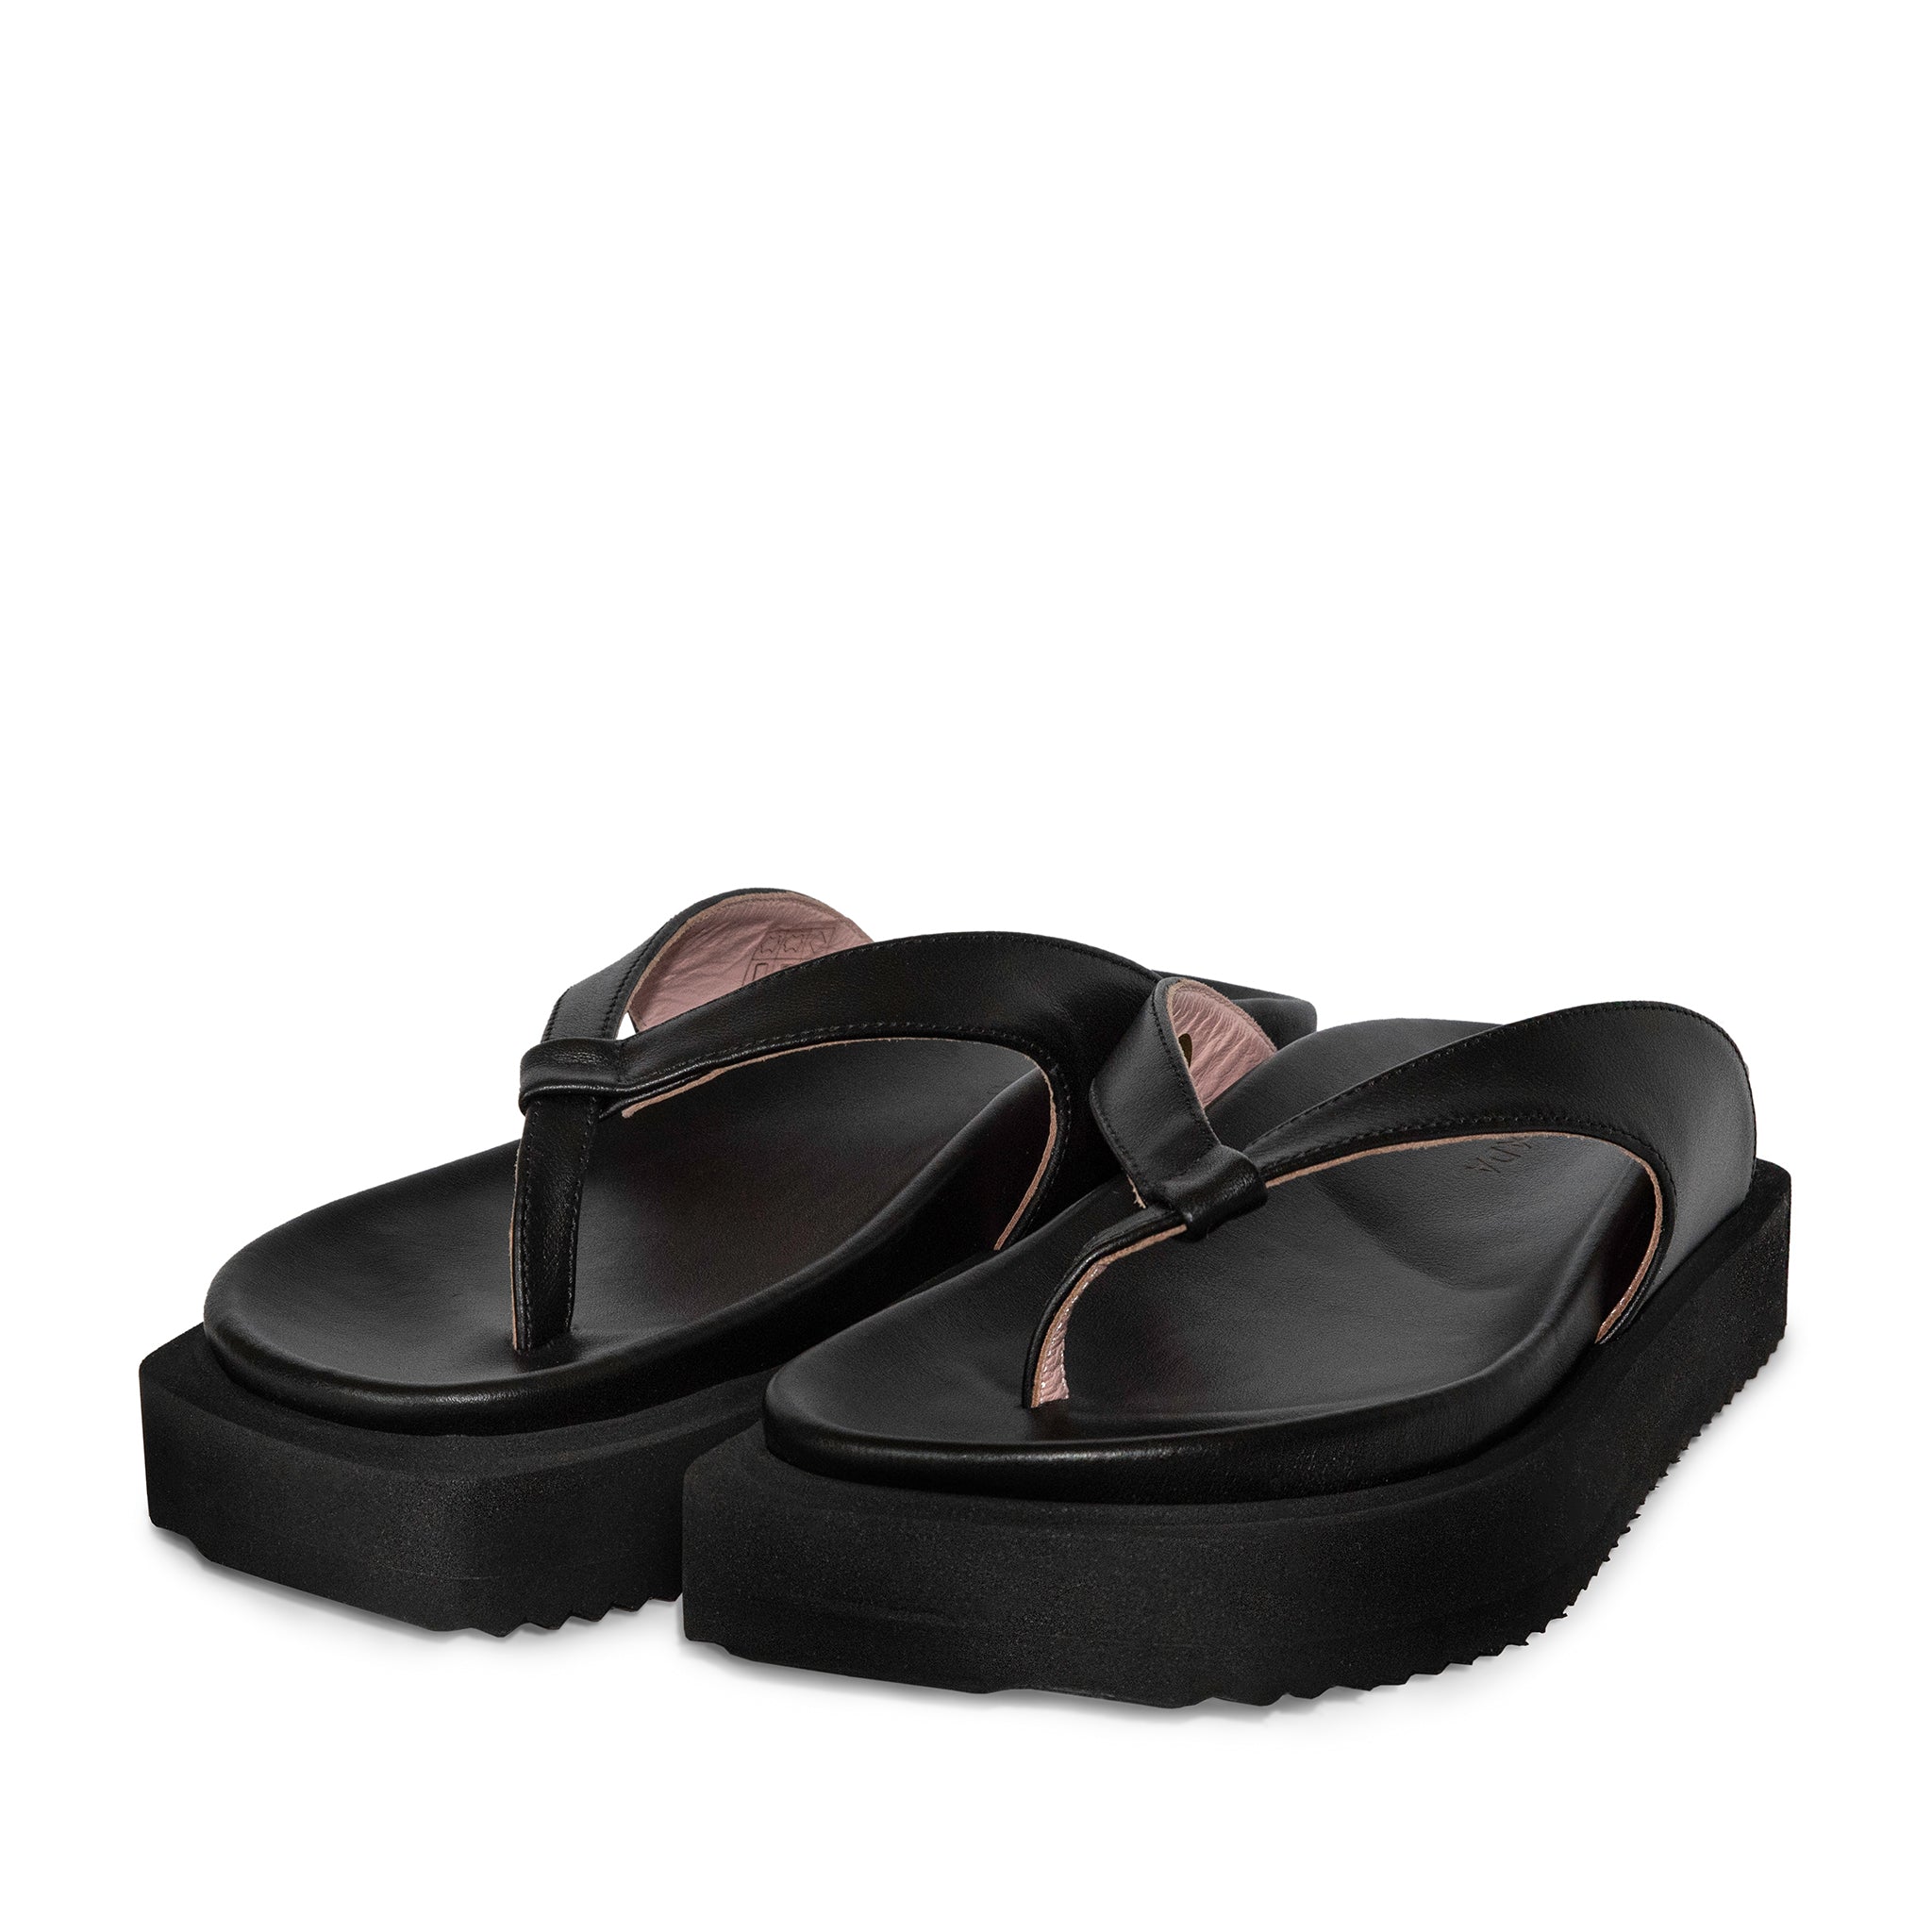 Sora Black Leather Sandals LES23127-BLACK - 3